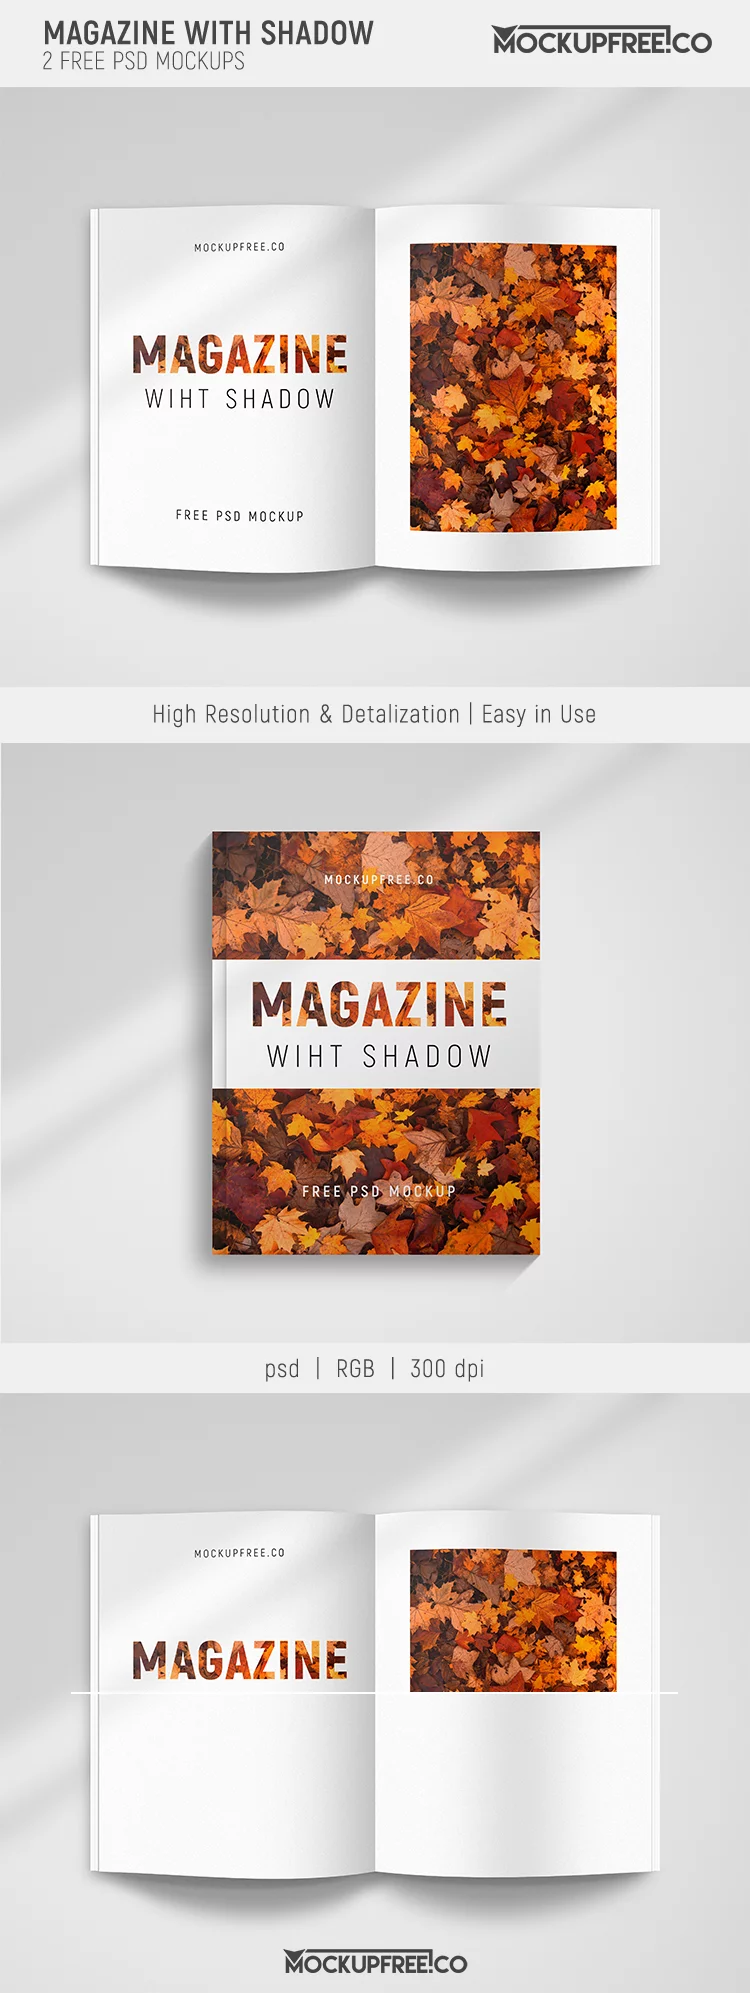 Magazine With Shadow – 2 Free PSD Mockups